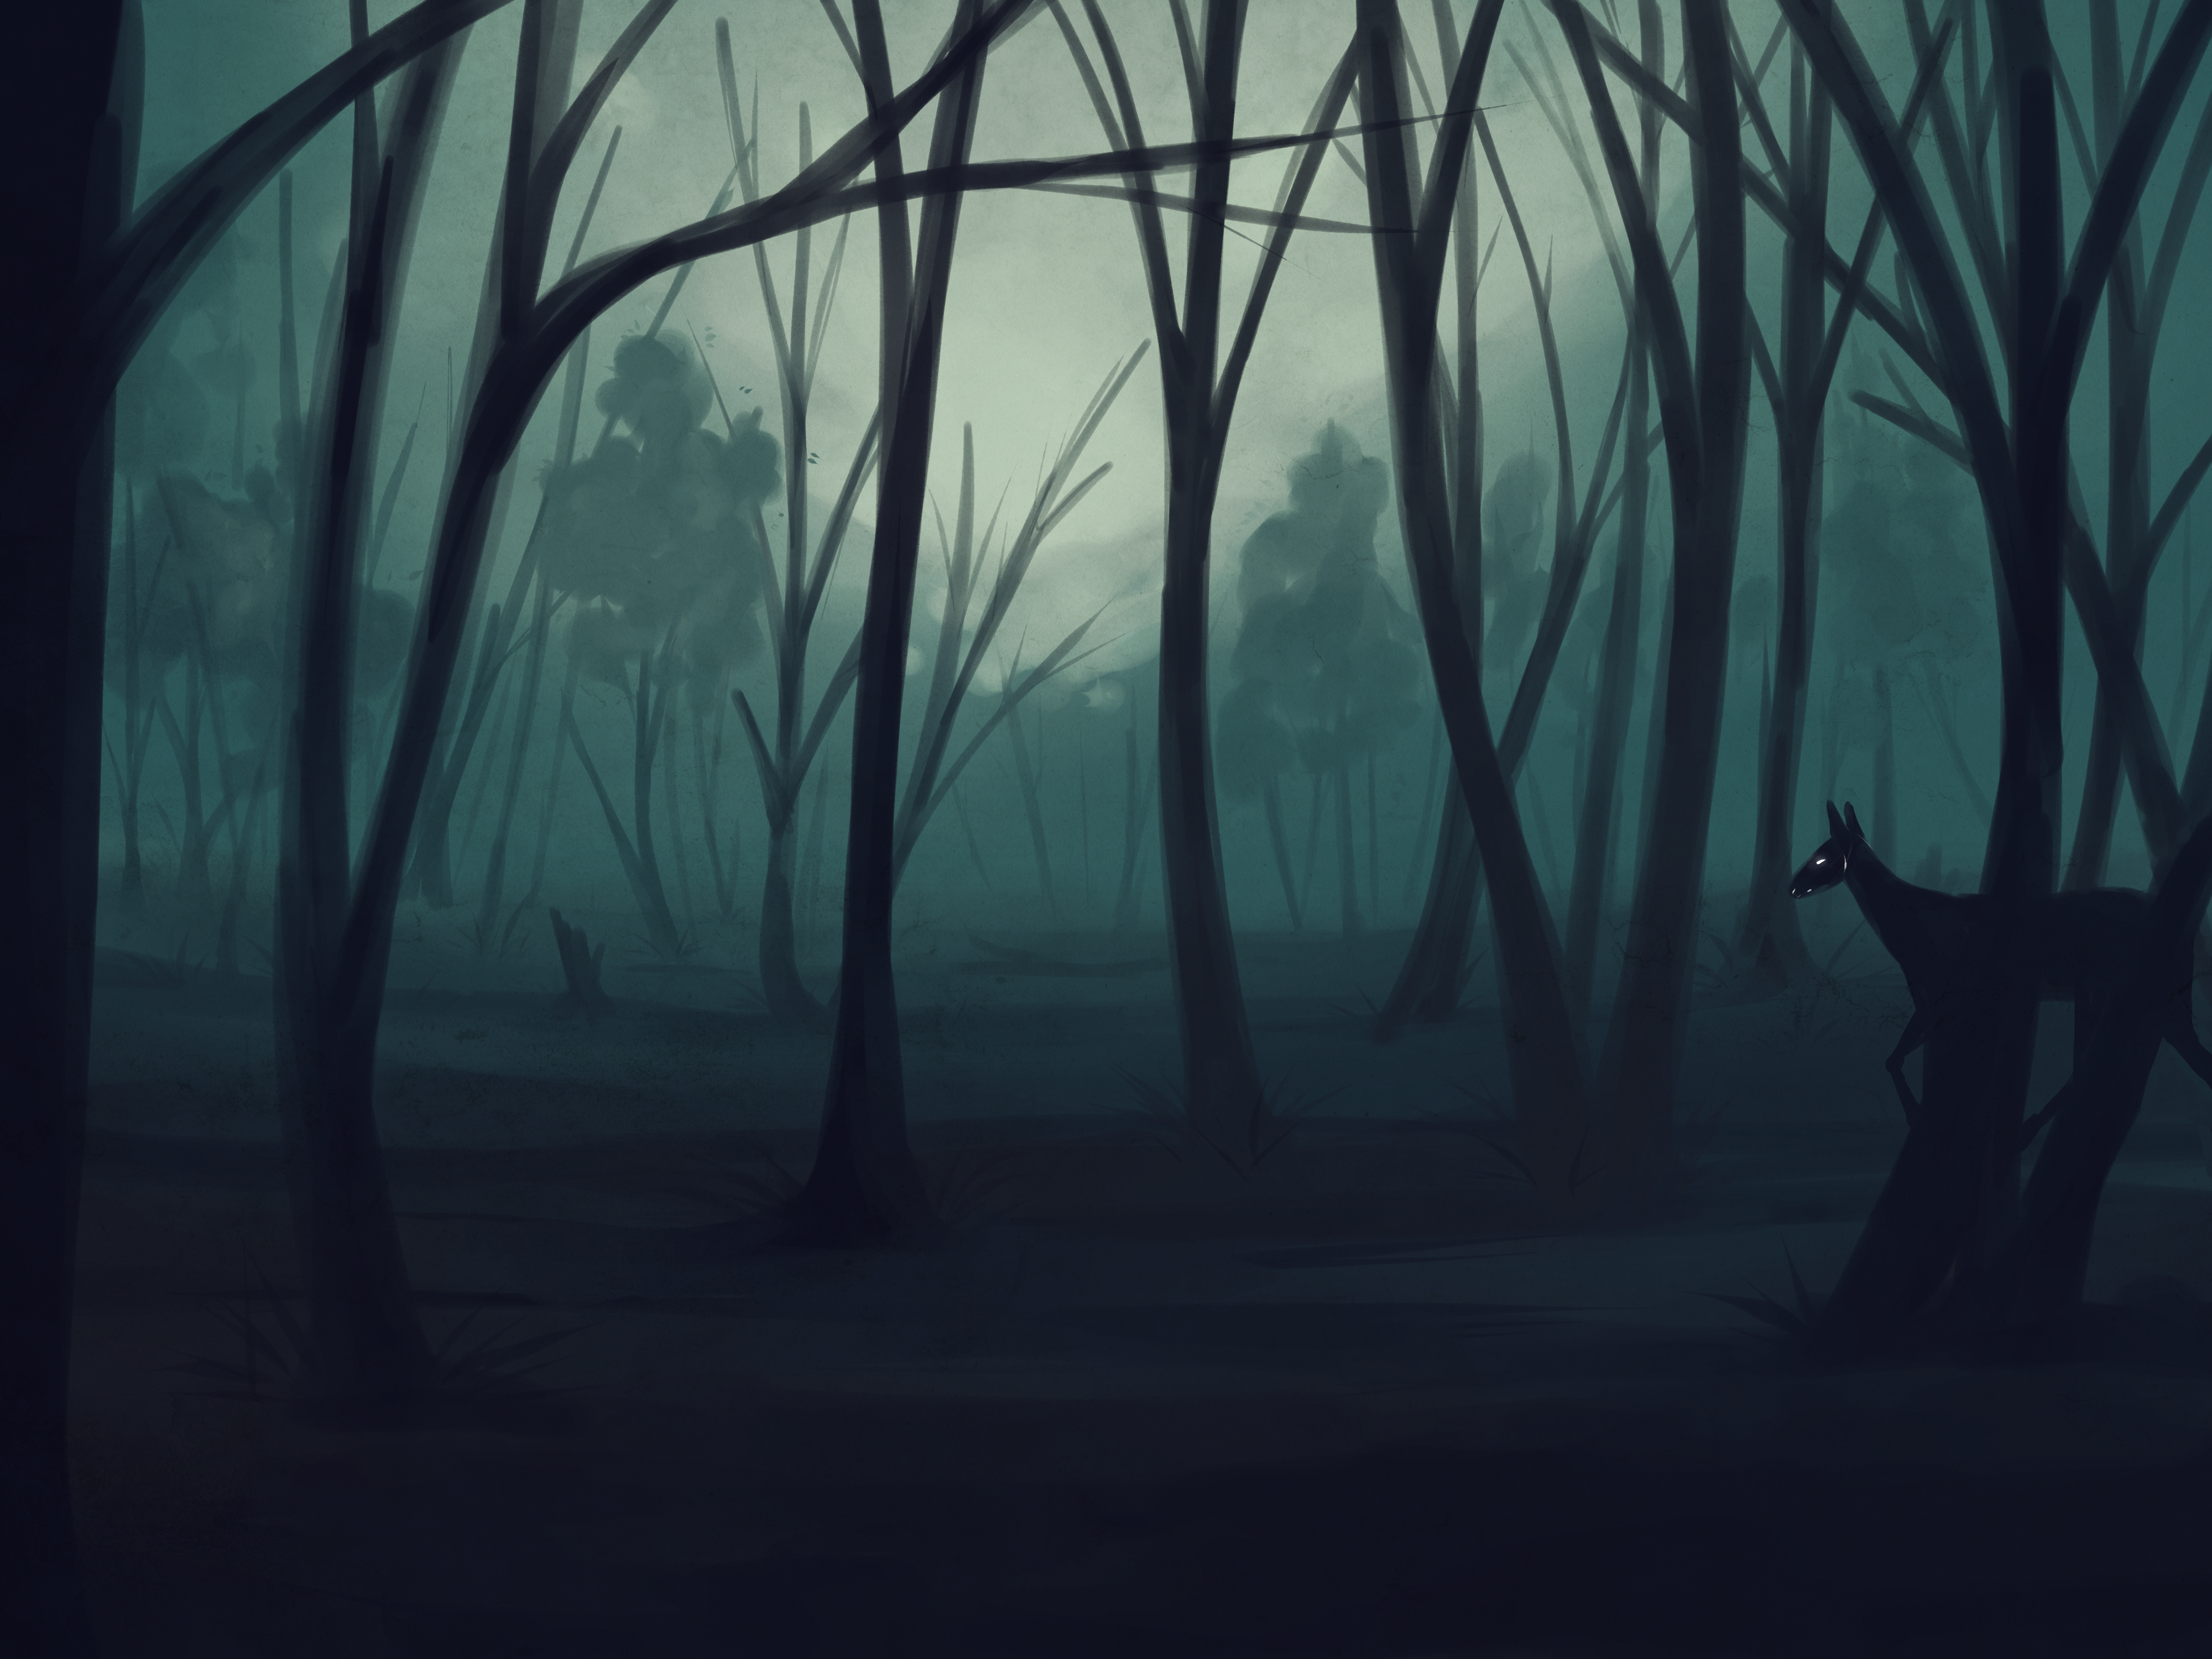 Dark Woods by CoyoteSoot on DeviantArt